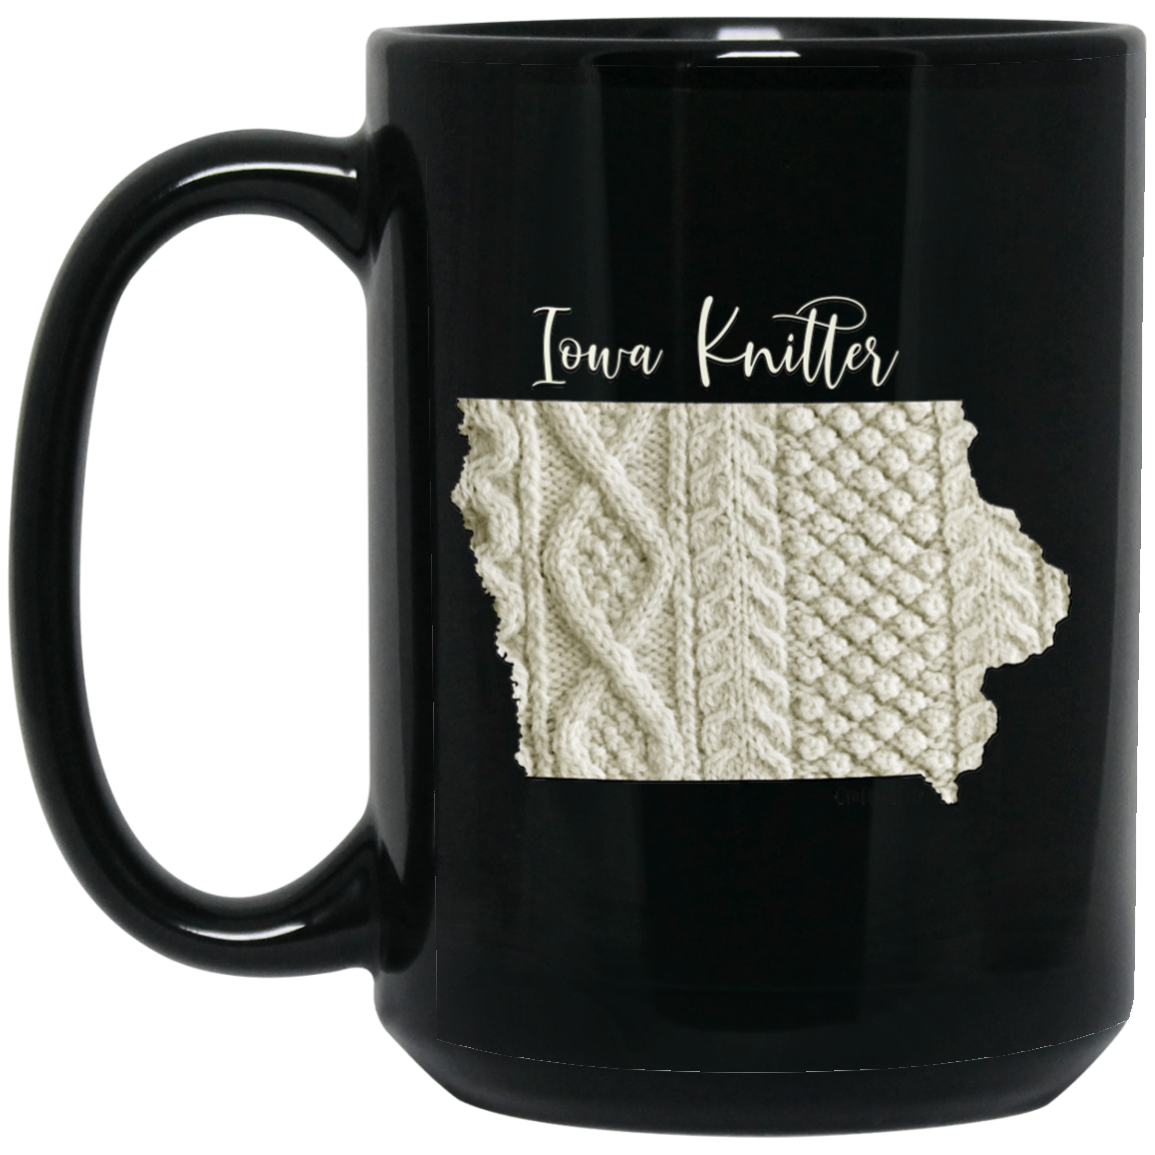 Iowa Knitter Mugs